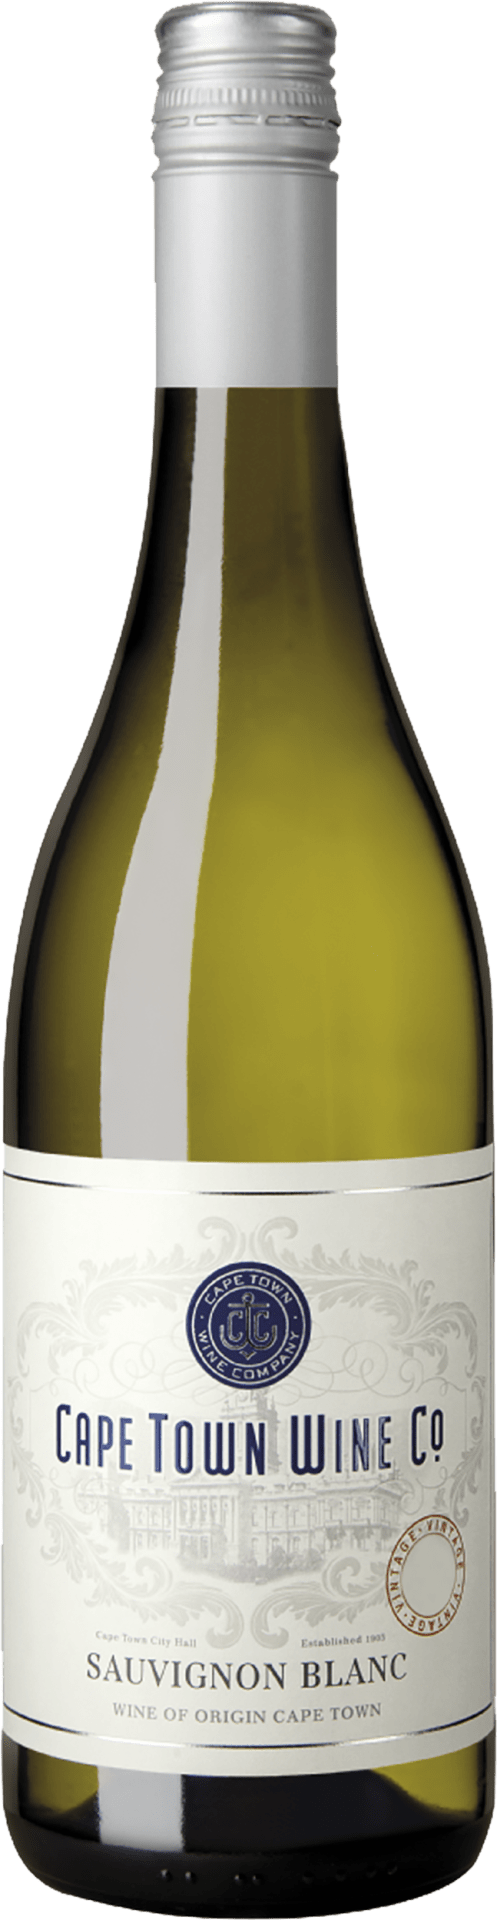 Cape Town Wine Co. Sauvignon Blanc Cape Point Vineyards